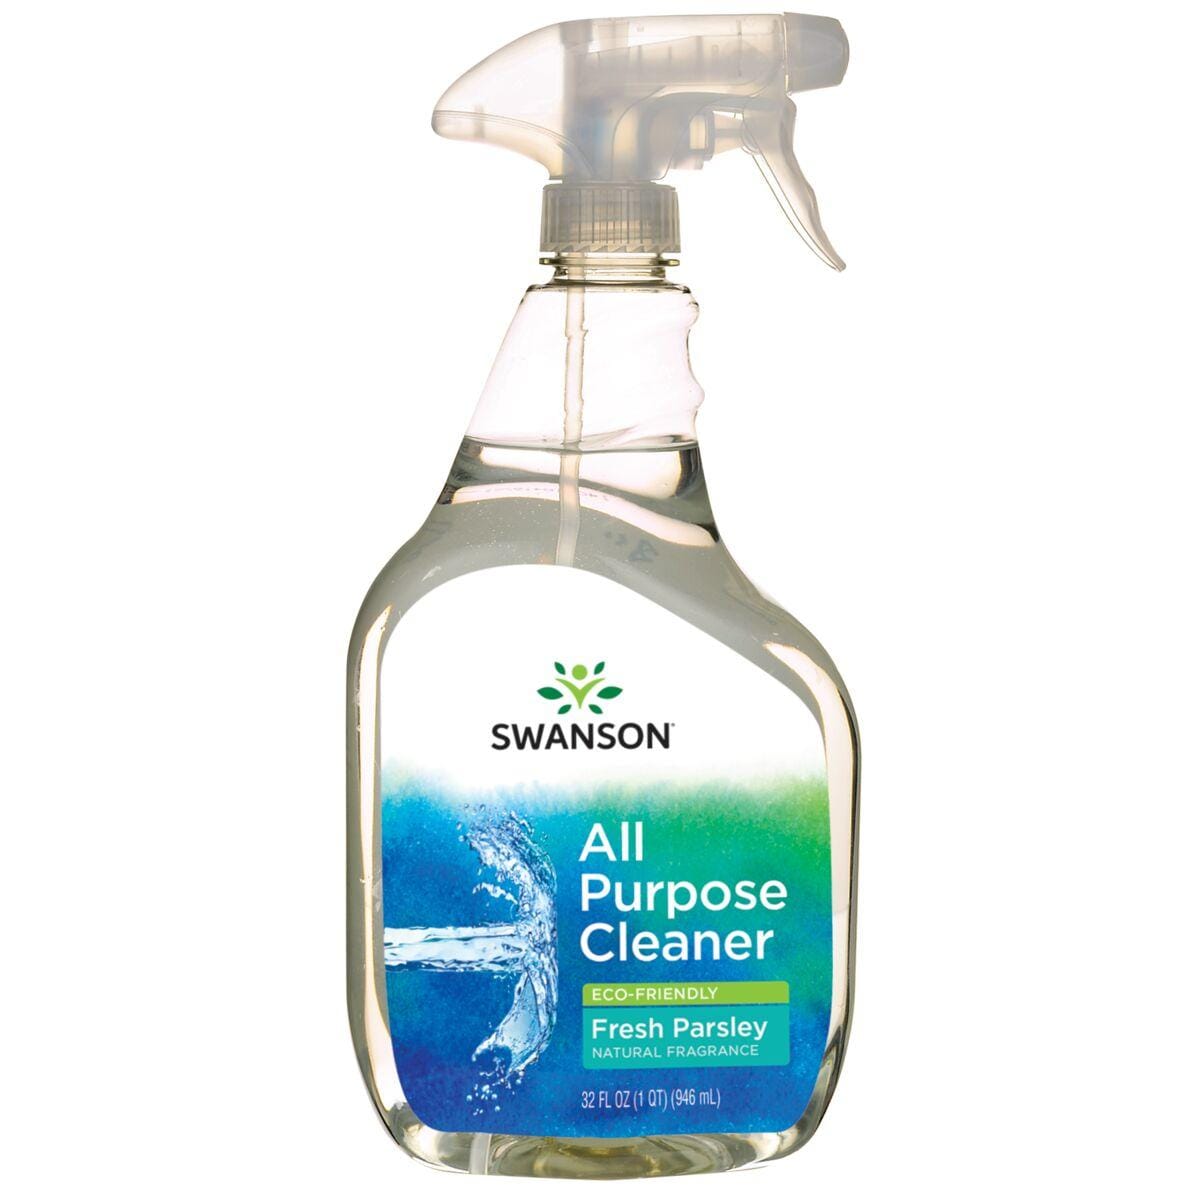 Swanson Healthy Home All-Purpose Cleaner - Eco-Friendly Fresh Parsley 32 fl oz Liquid